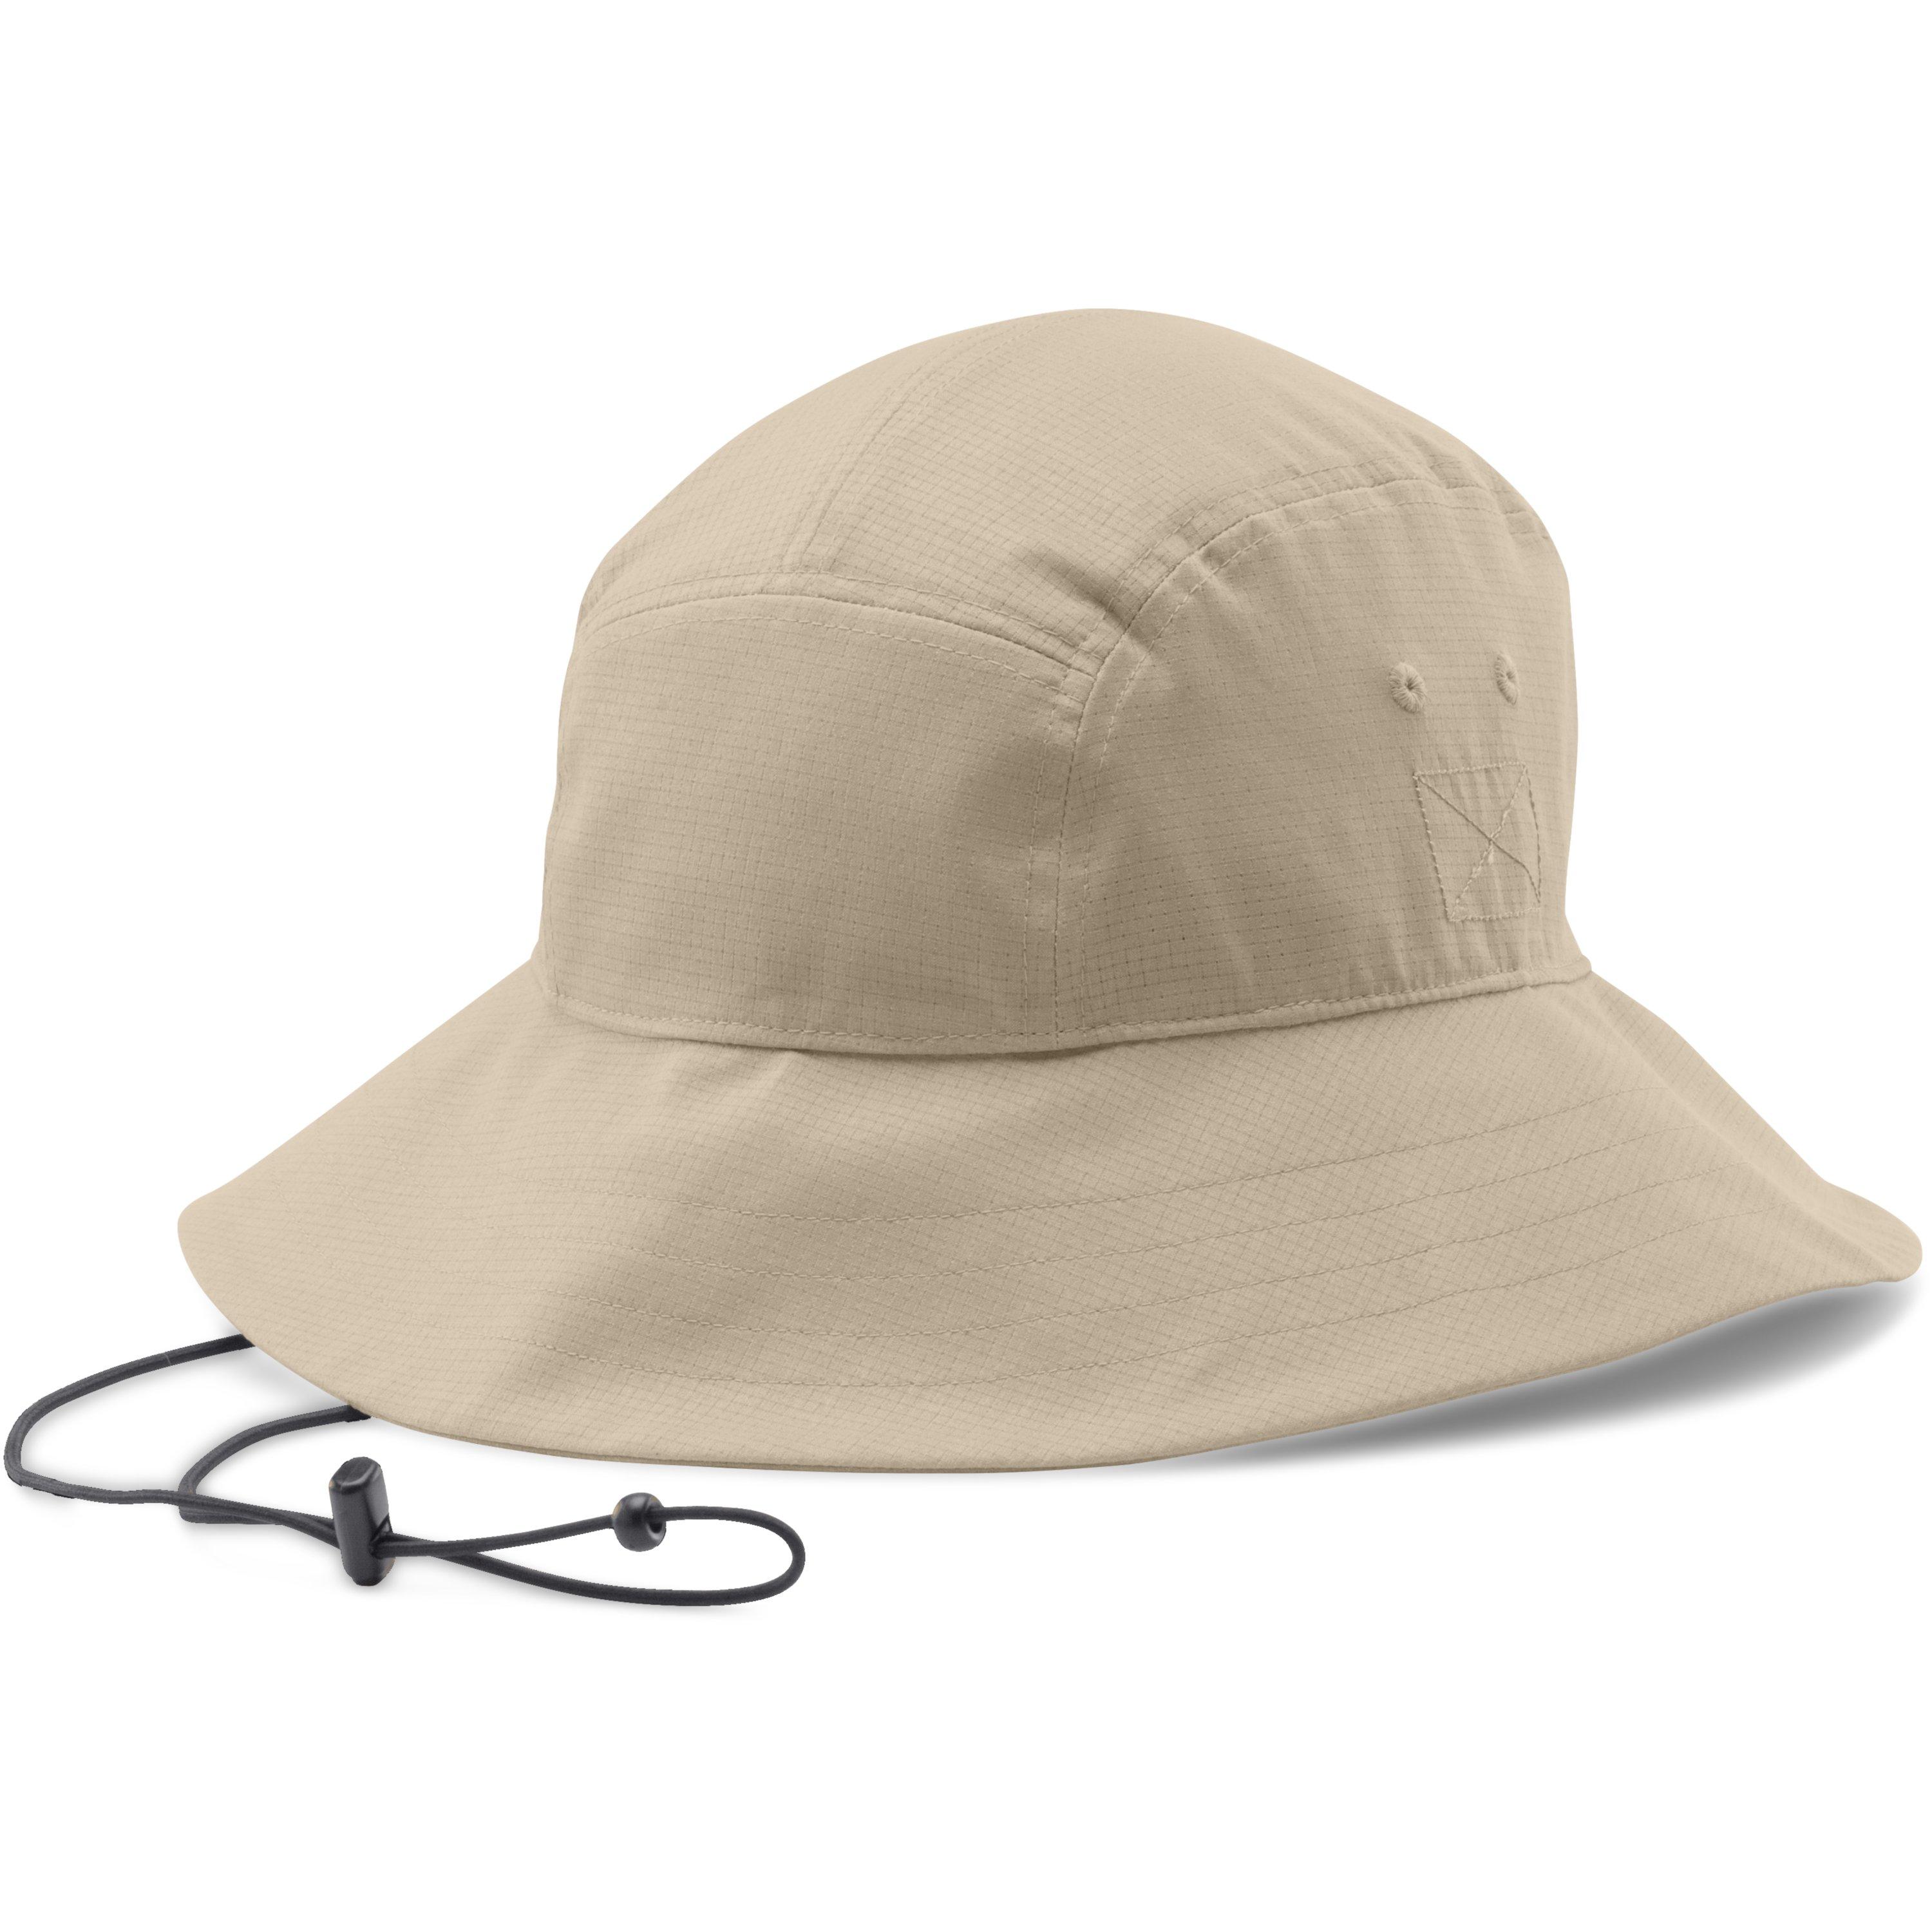 Lyst - Under Armour Men's Ua Warrior Bucket Hat in Natural for Men